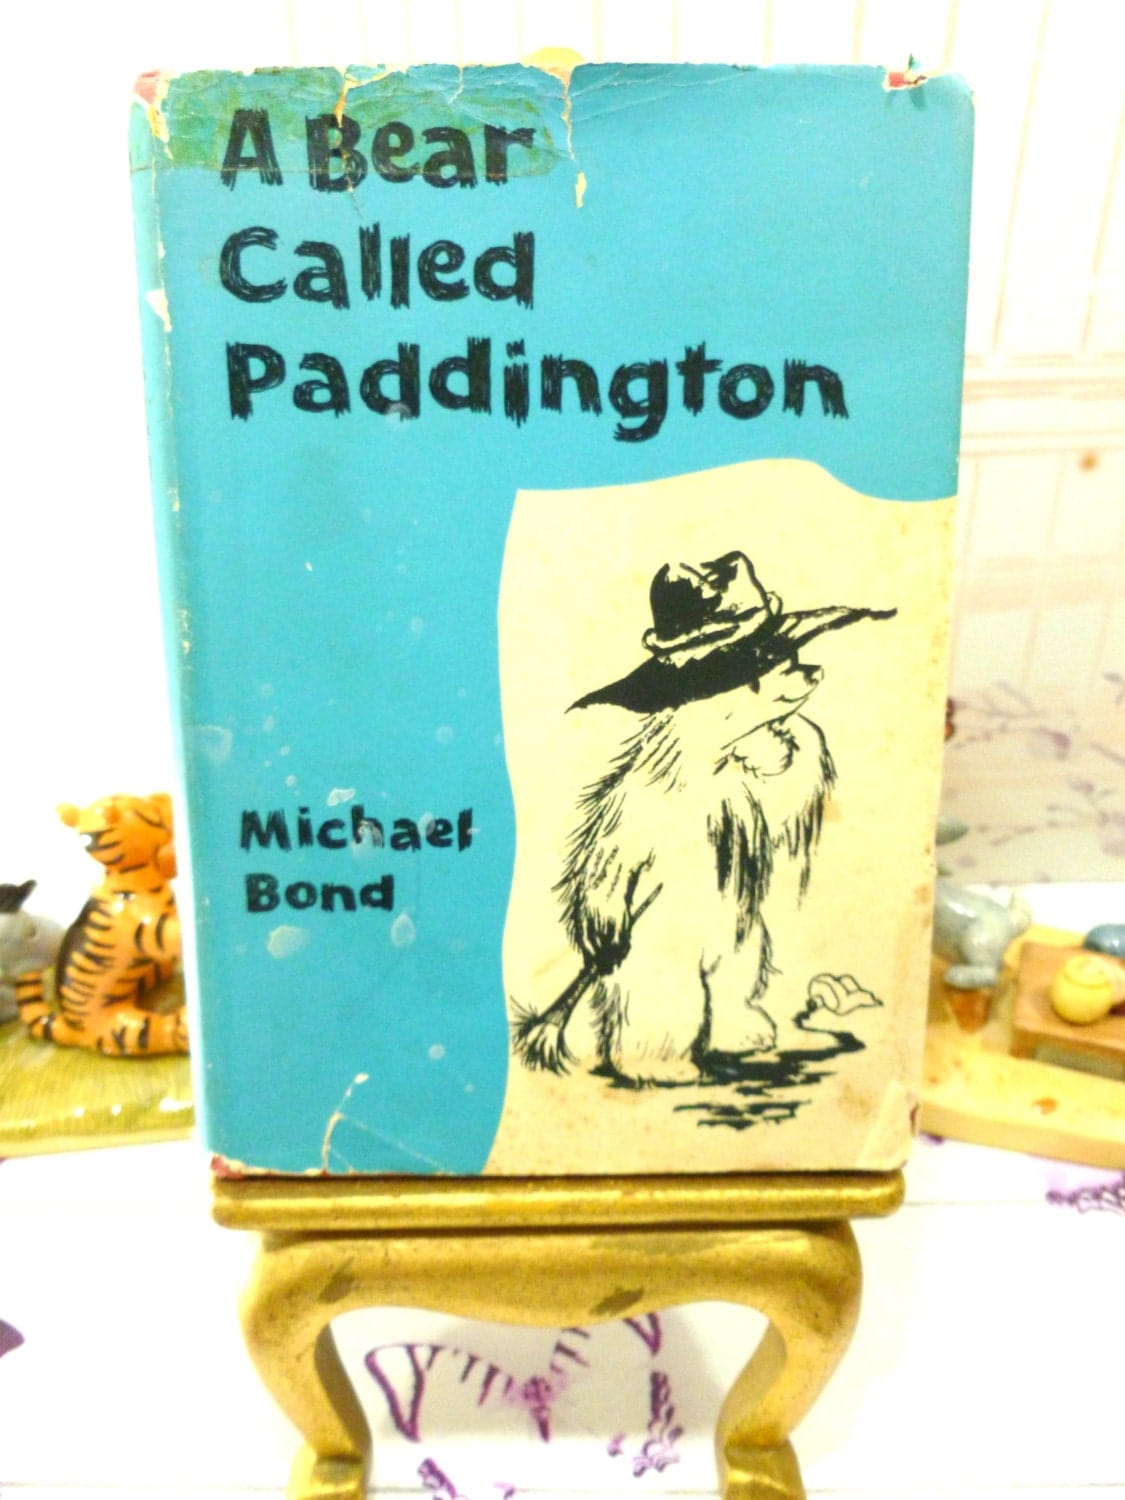 A Bear Called Paddington Vintage Paddington Bear Book First English Edition scarce with Dust Jacket Peggy Fortnum Illustrator 4th print